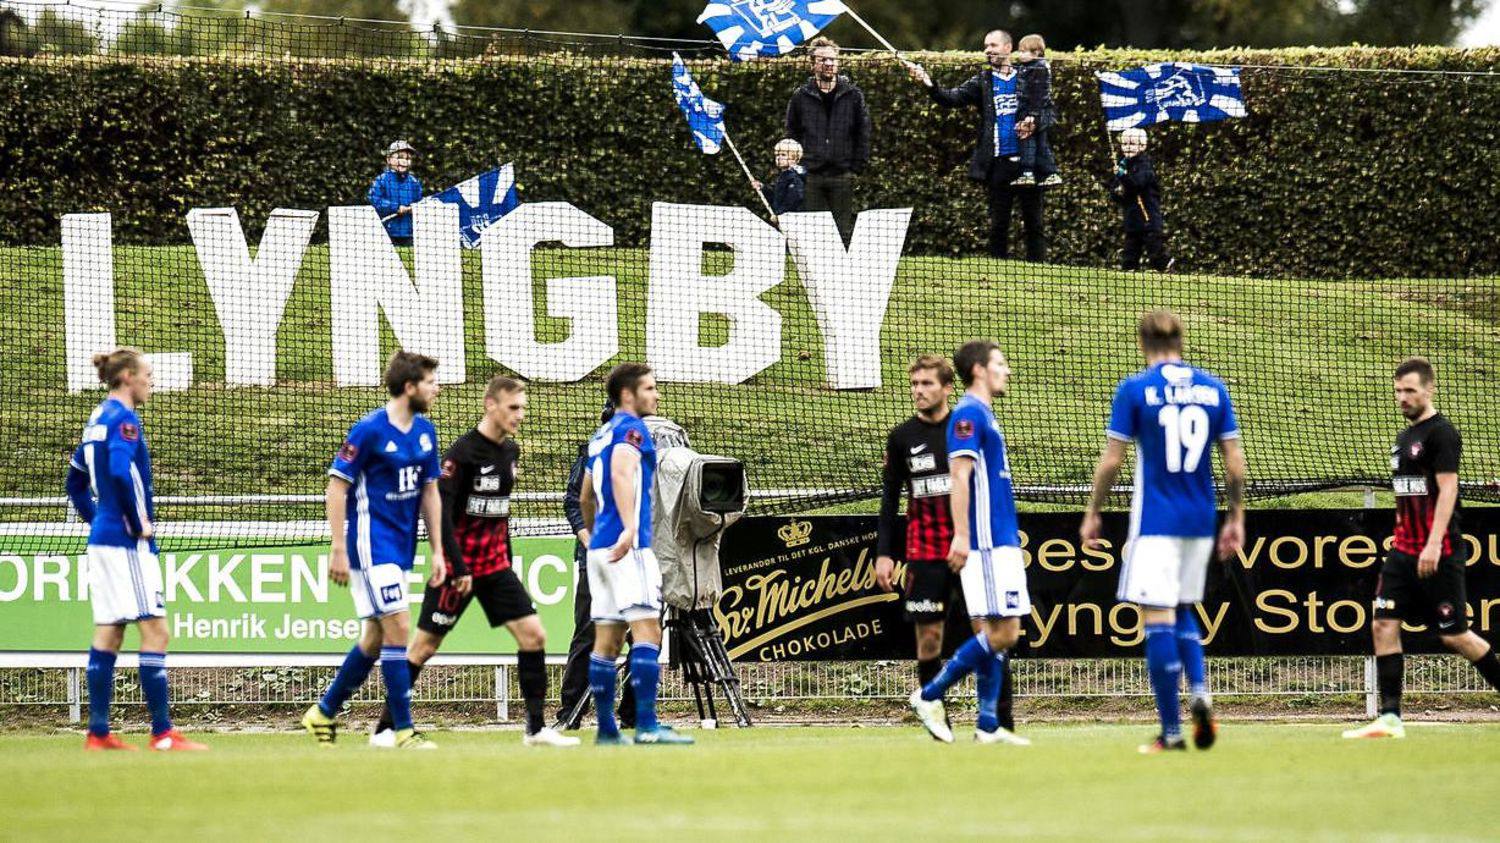 Lyngby Bangor Maçı İddaa Tahmini 29.6.2017